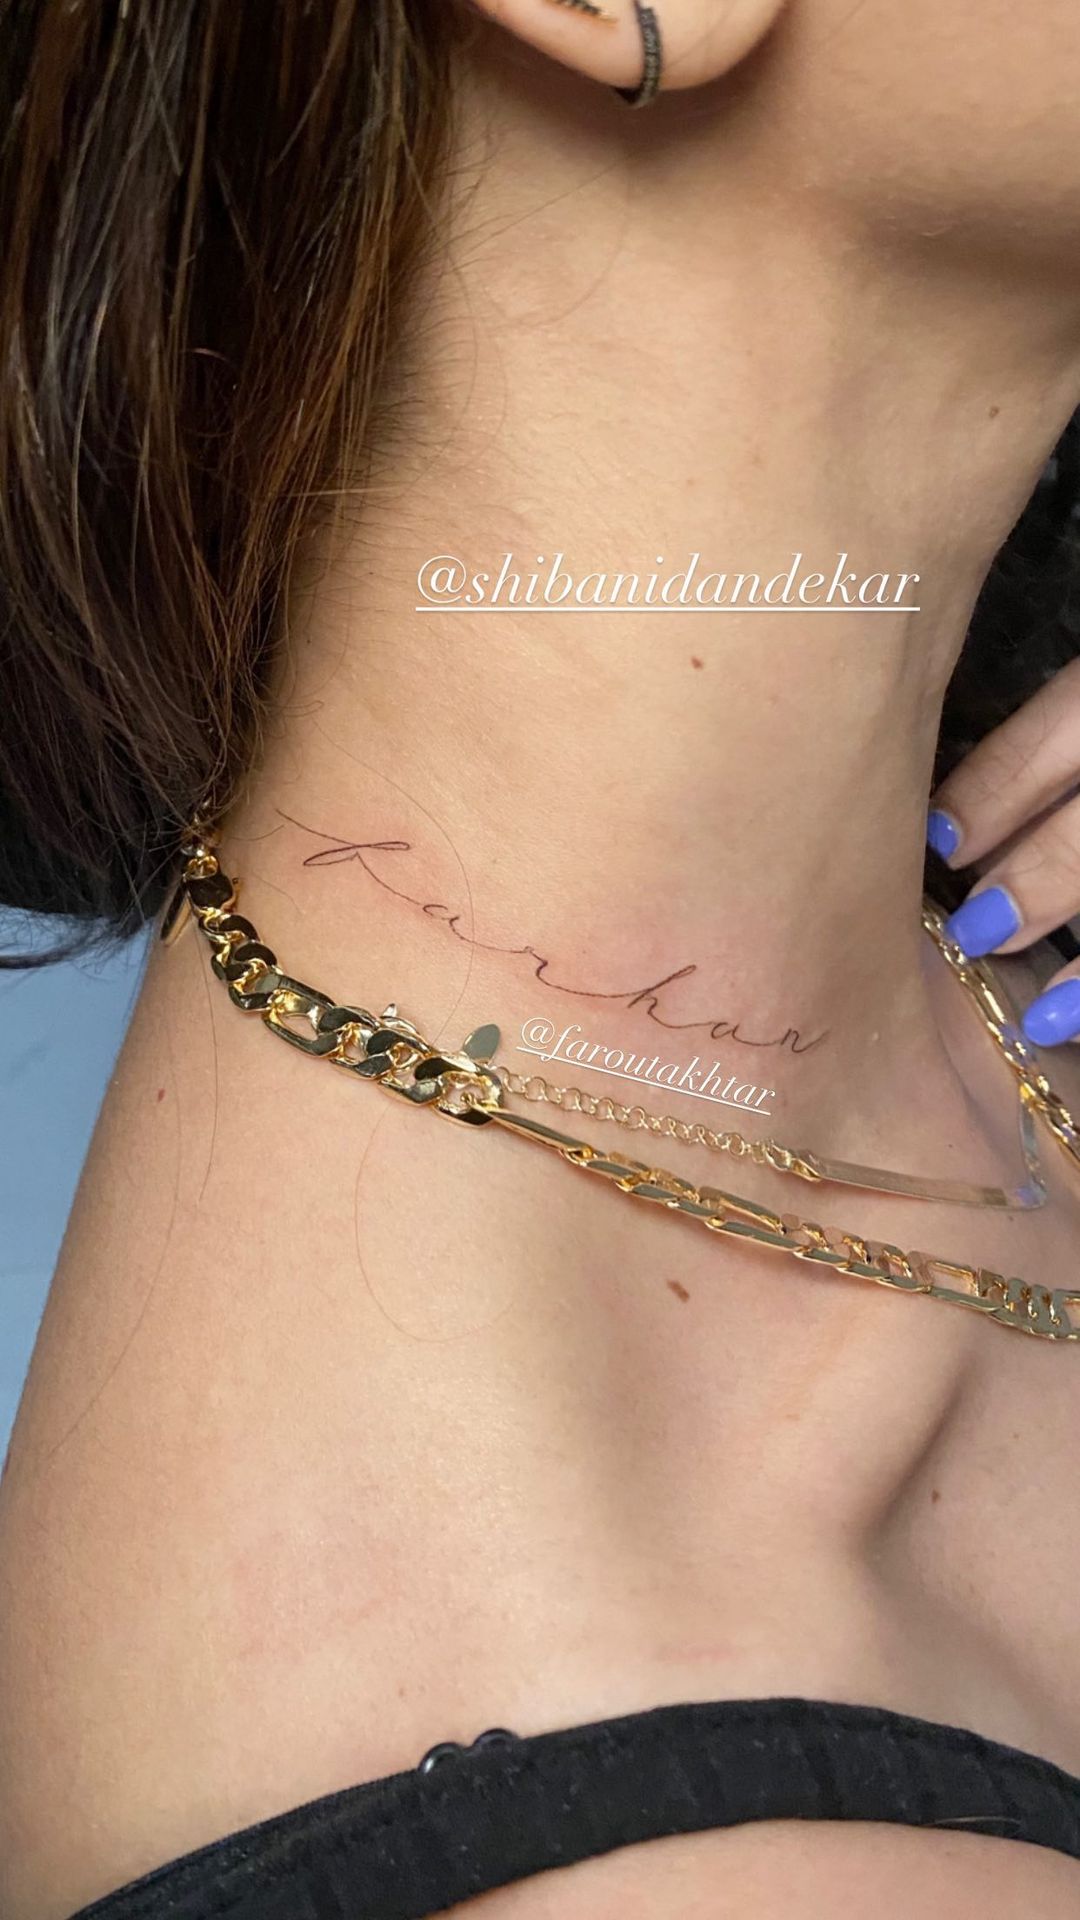 Shibani Dandekar gets boyfriend Farhan Akhtar's name inked on her neck